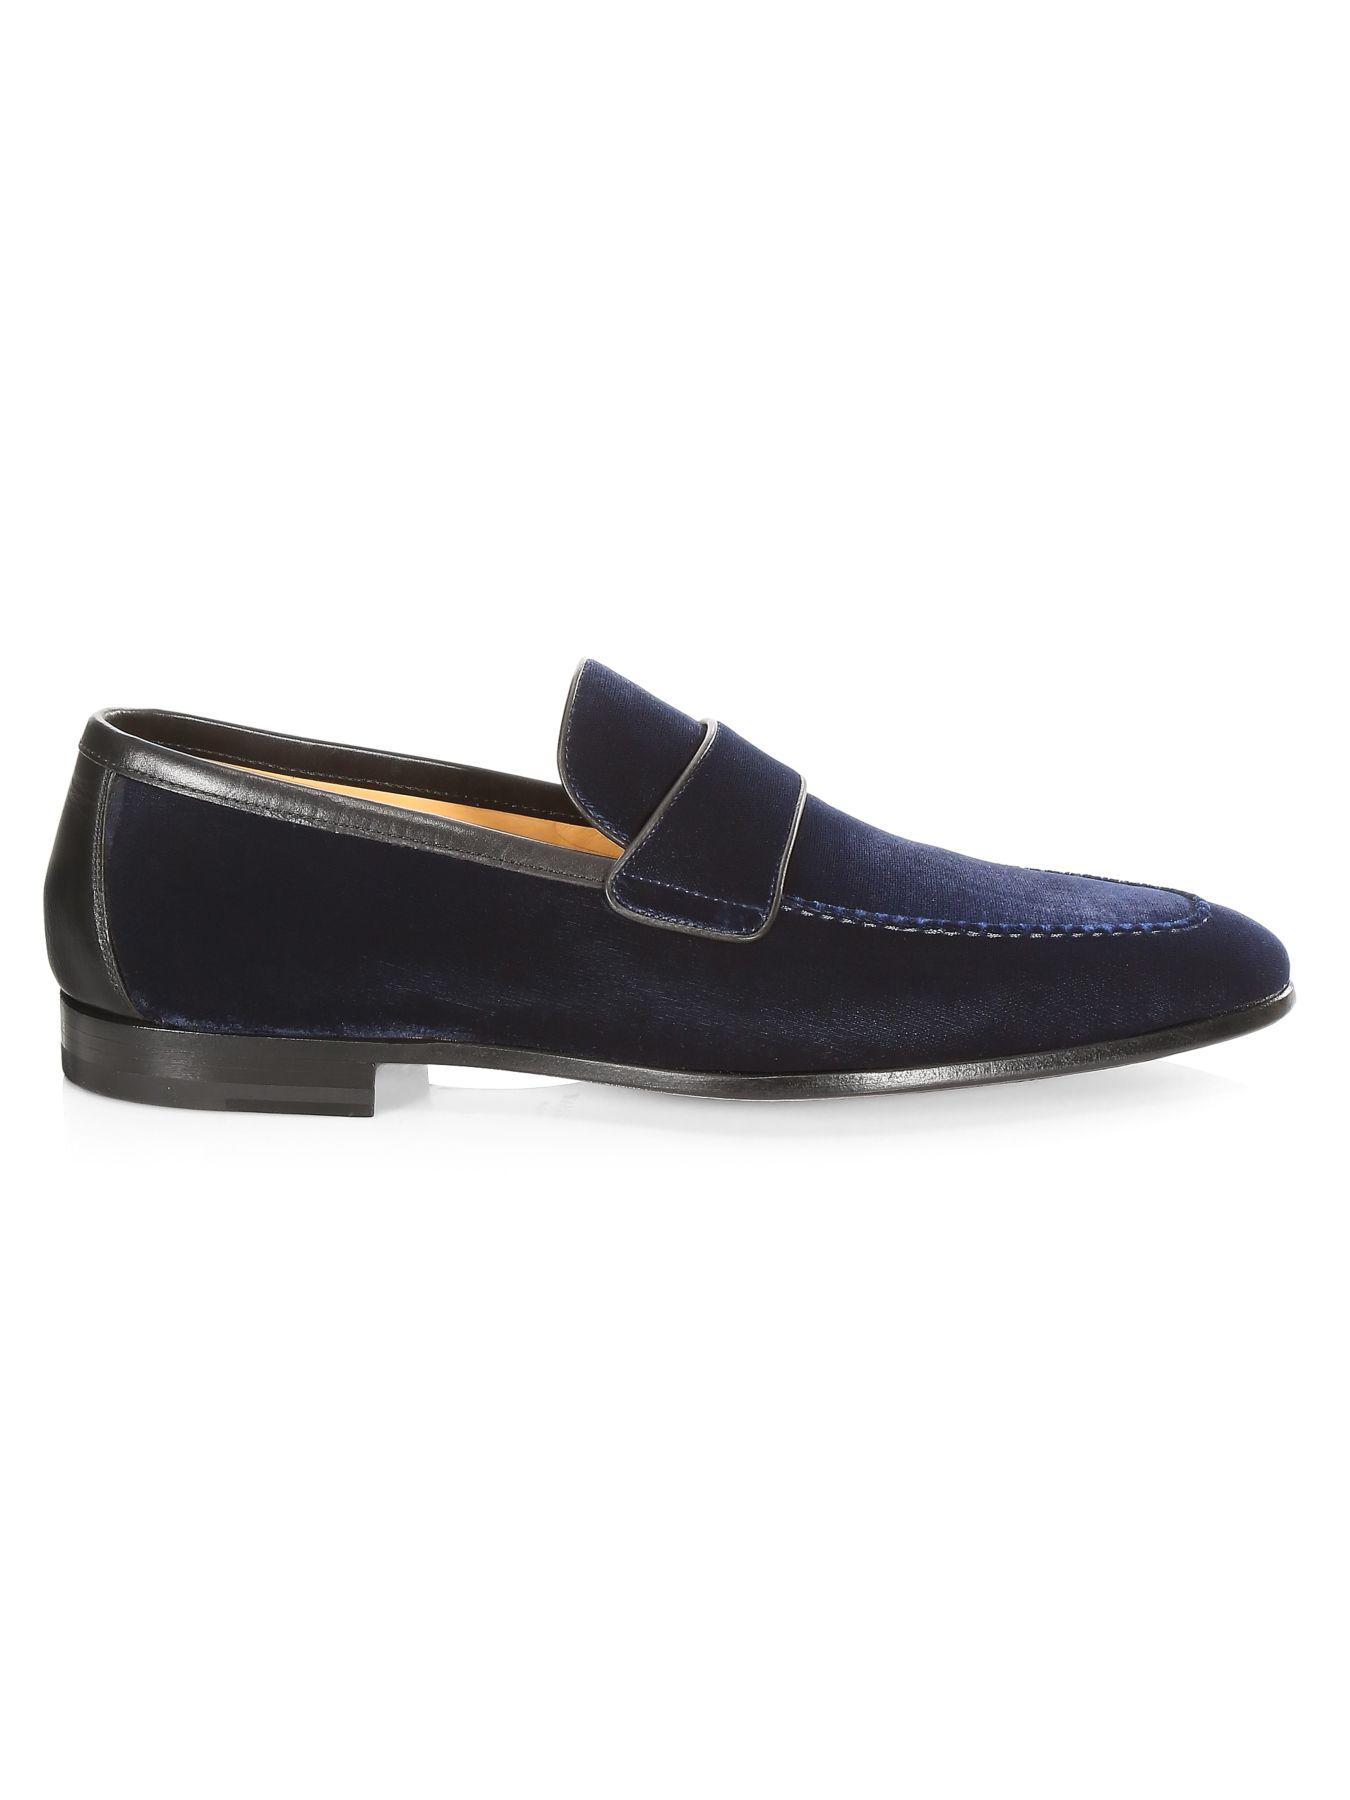 Saks Fifth Avenue Collection Velvet Loafers in Navy (Blue) for Men - Lyst